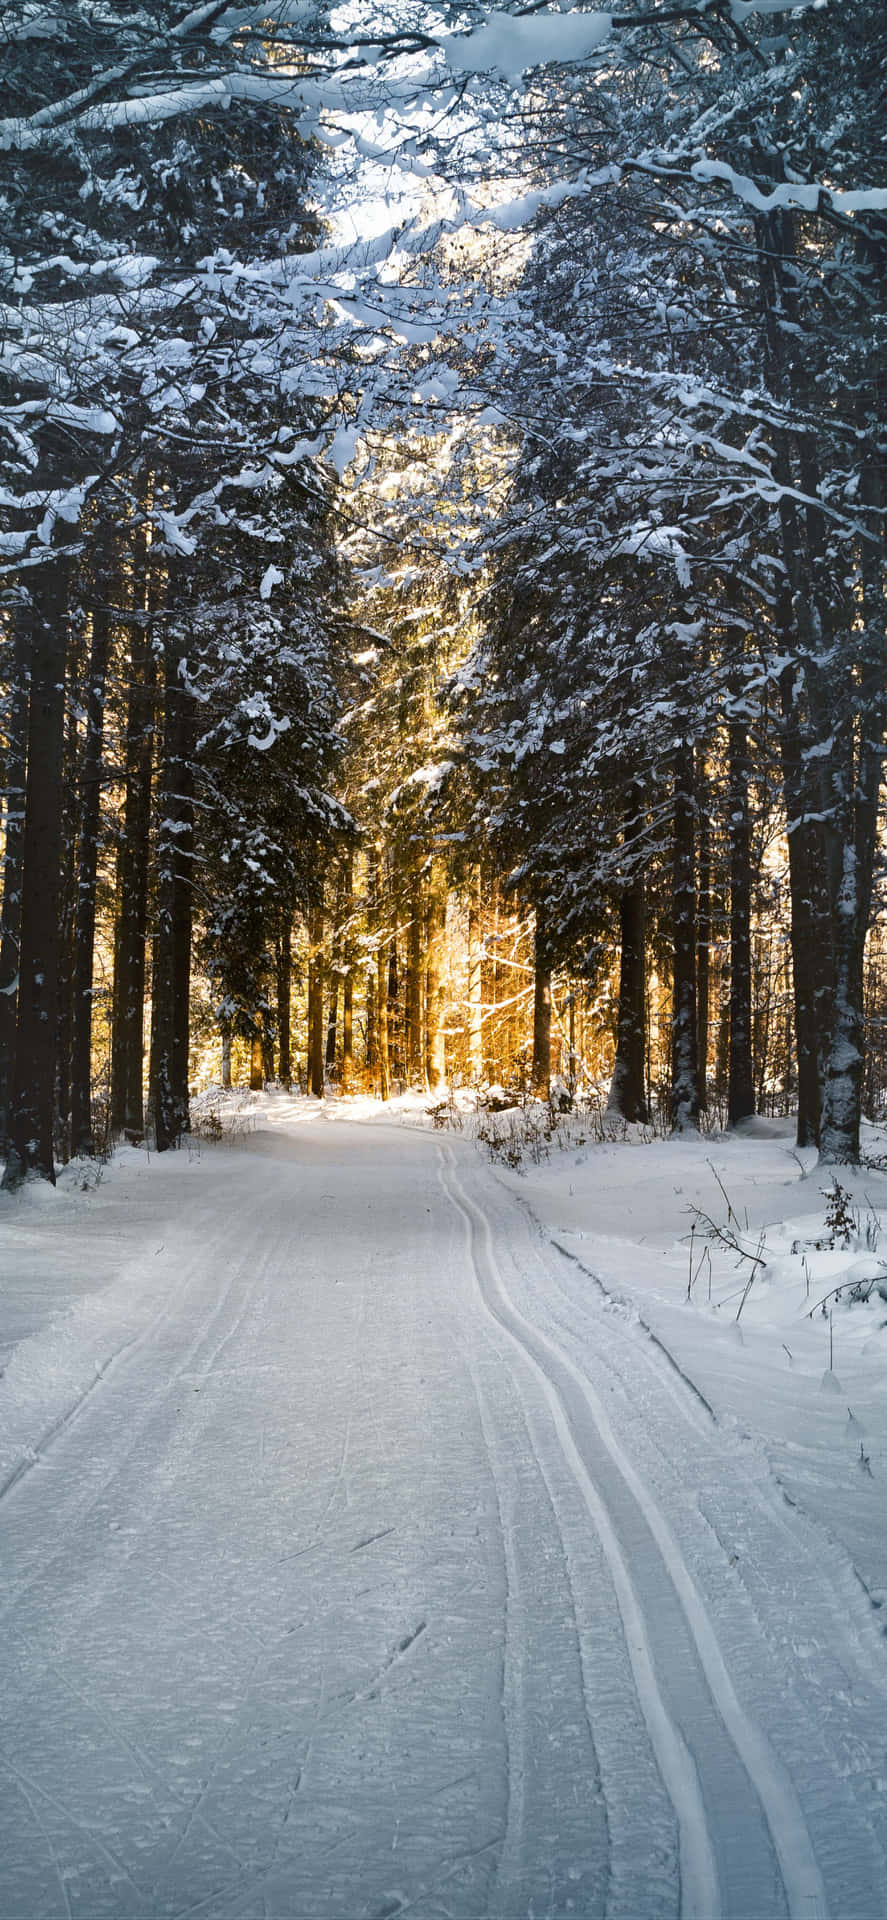 Tranquil Snowy Road Amidst Winter Wonderland Wallpaper